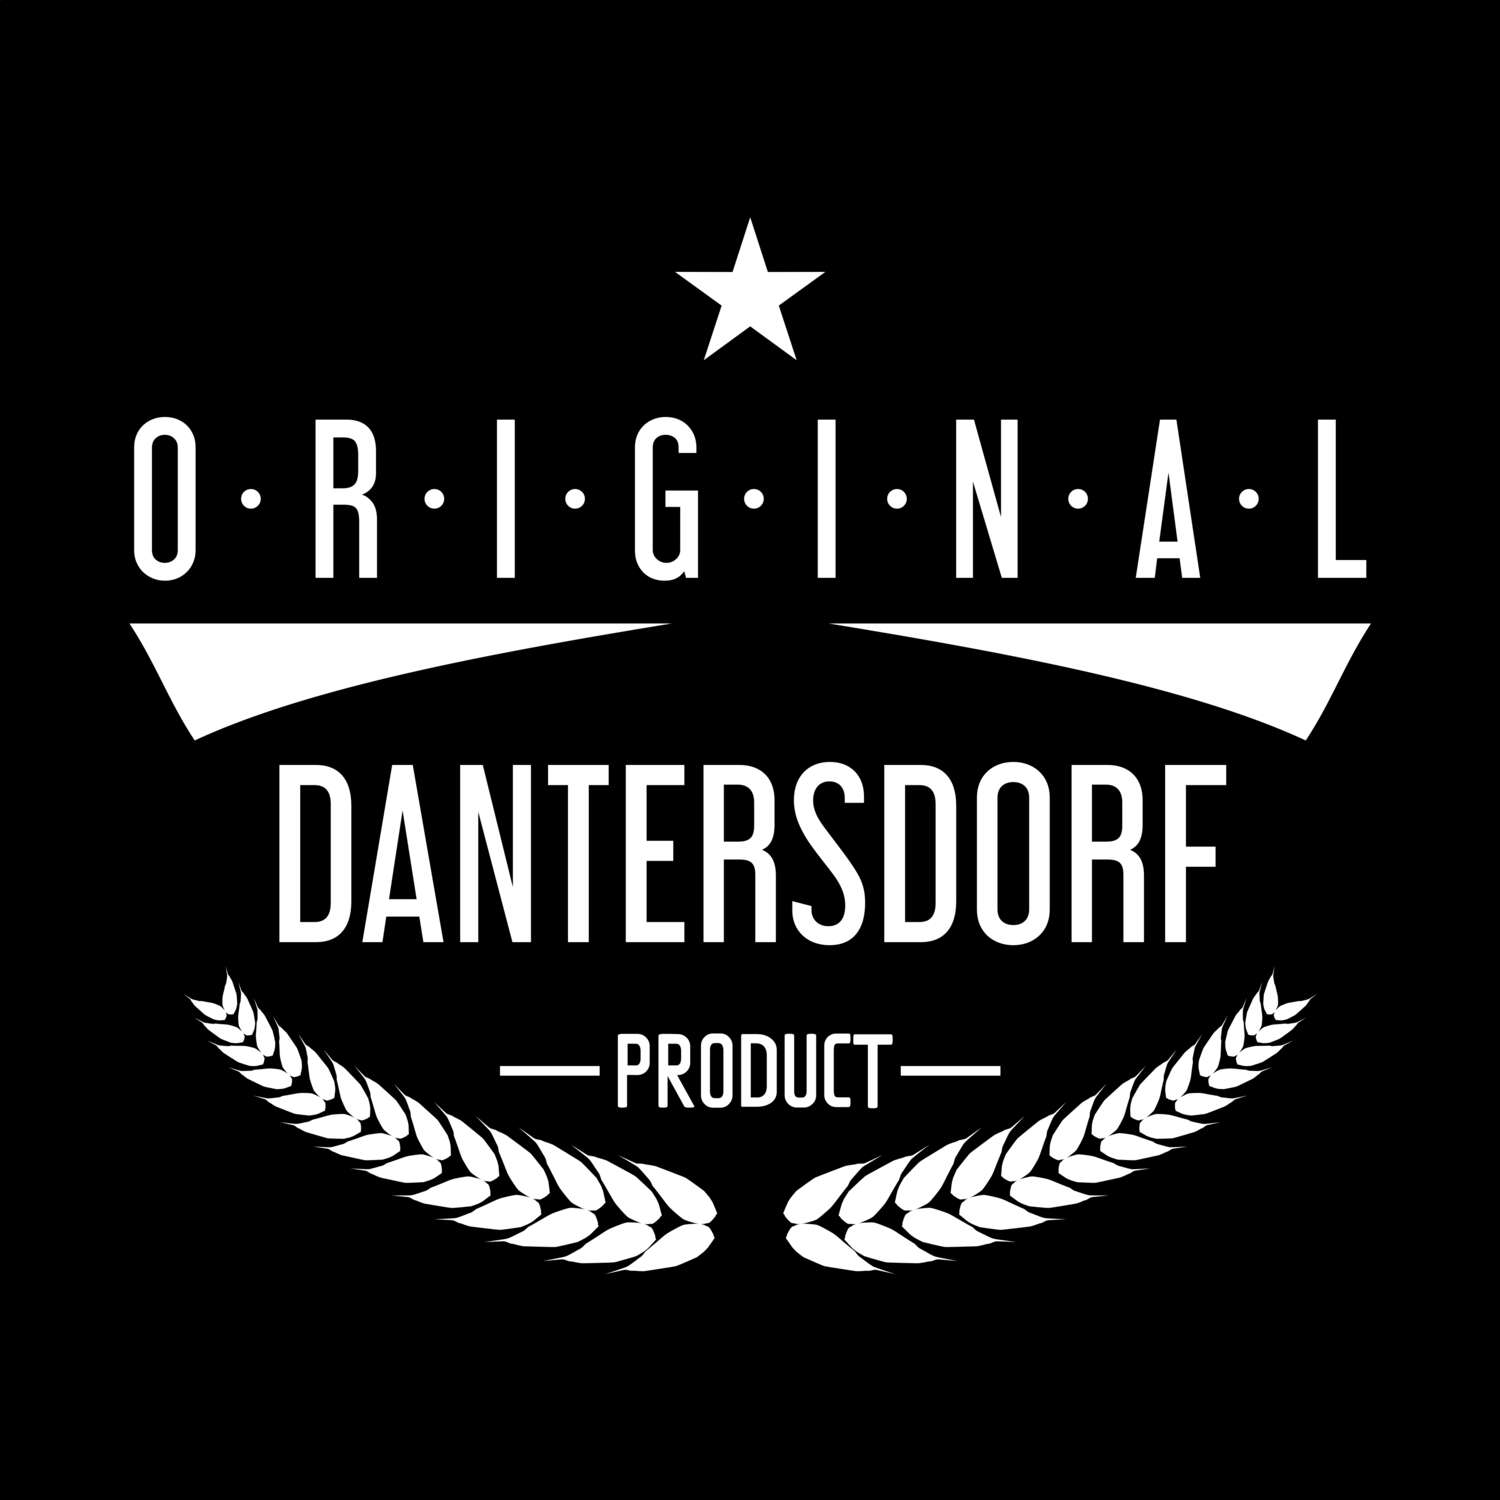 Dantersdorf T-Shirt »Original Product«